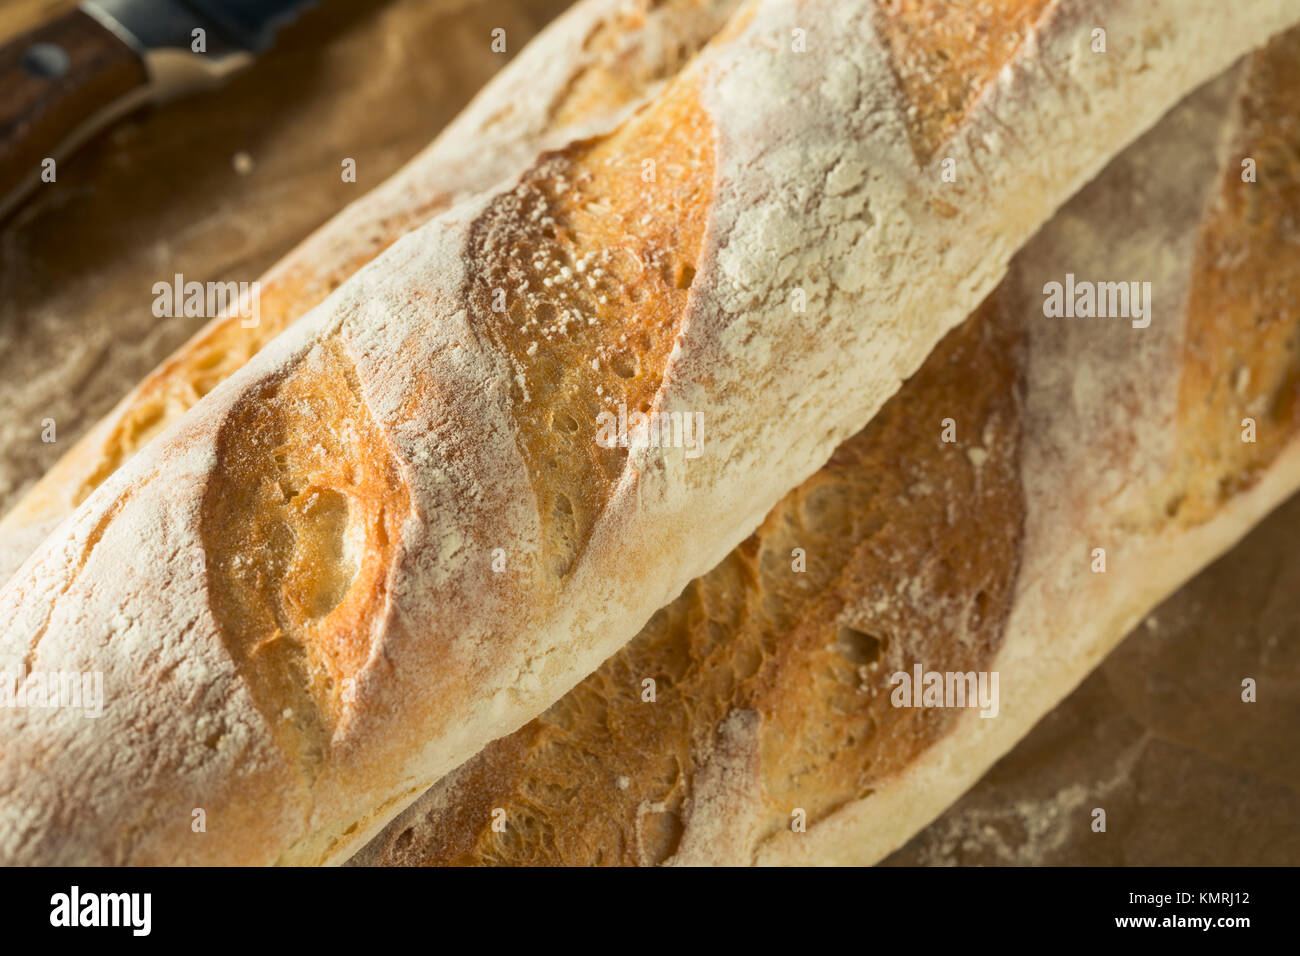 Pan francés crujiente baguette casero listo para comer Foto de stock